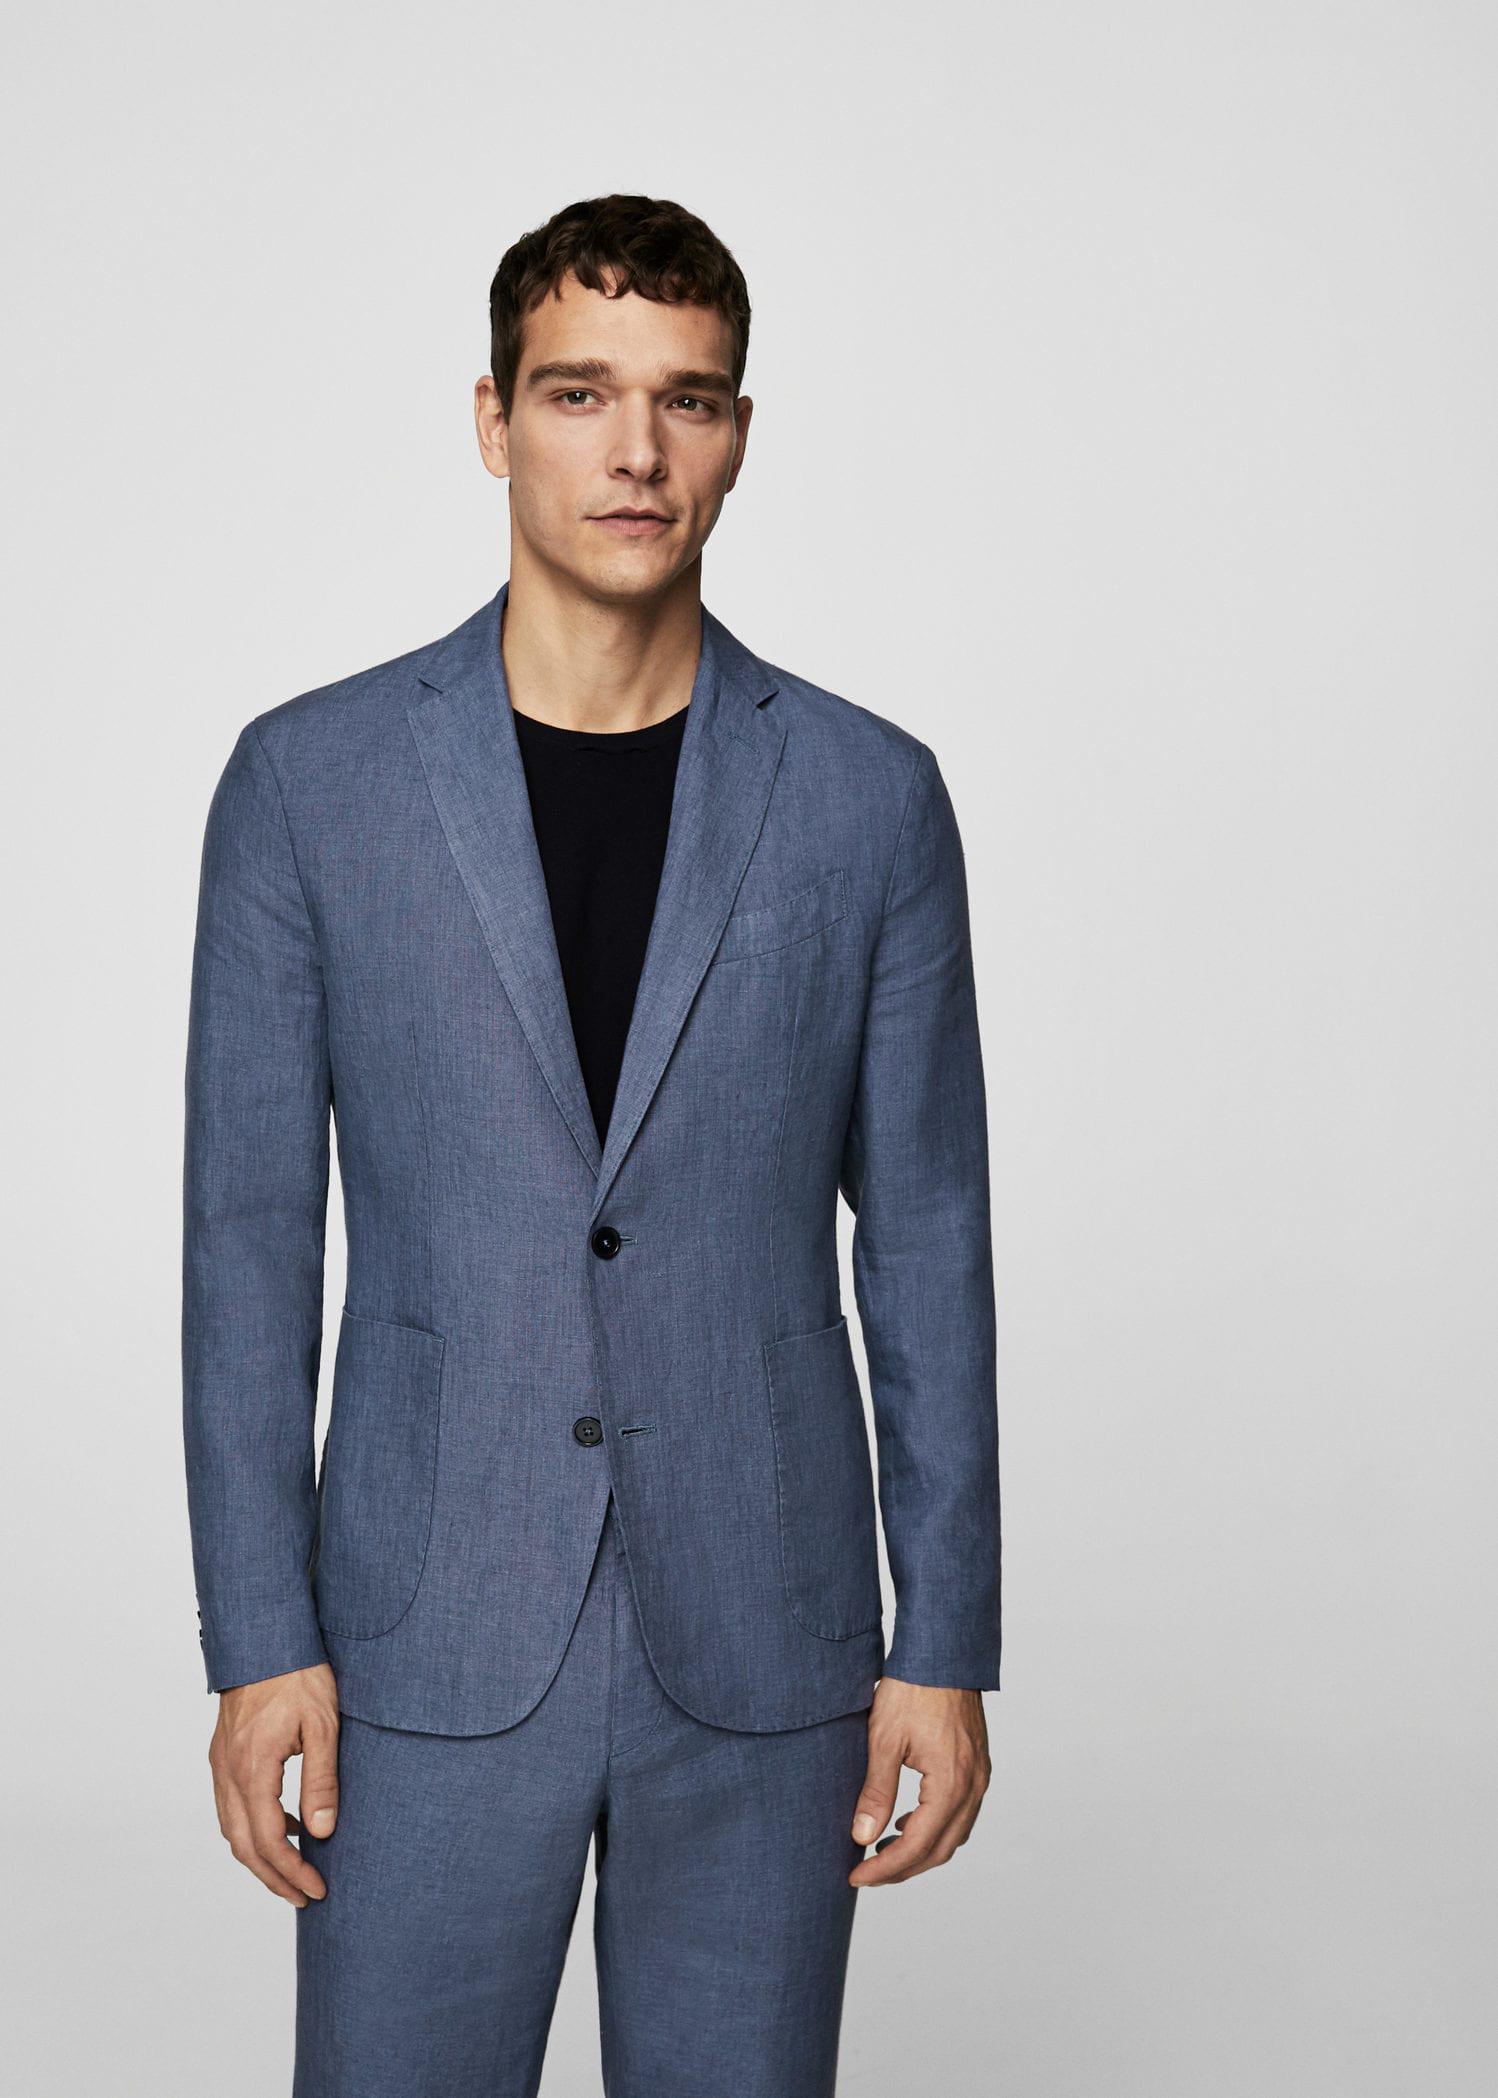 Mens Navy Blue Linen Suits / A linen suit is the ultimate summer luxury ...